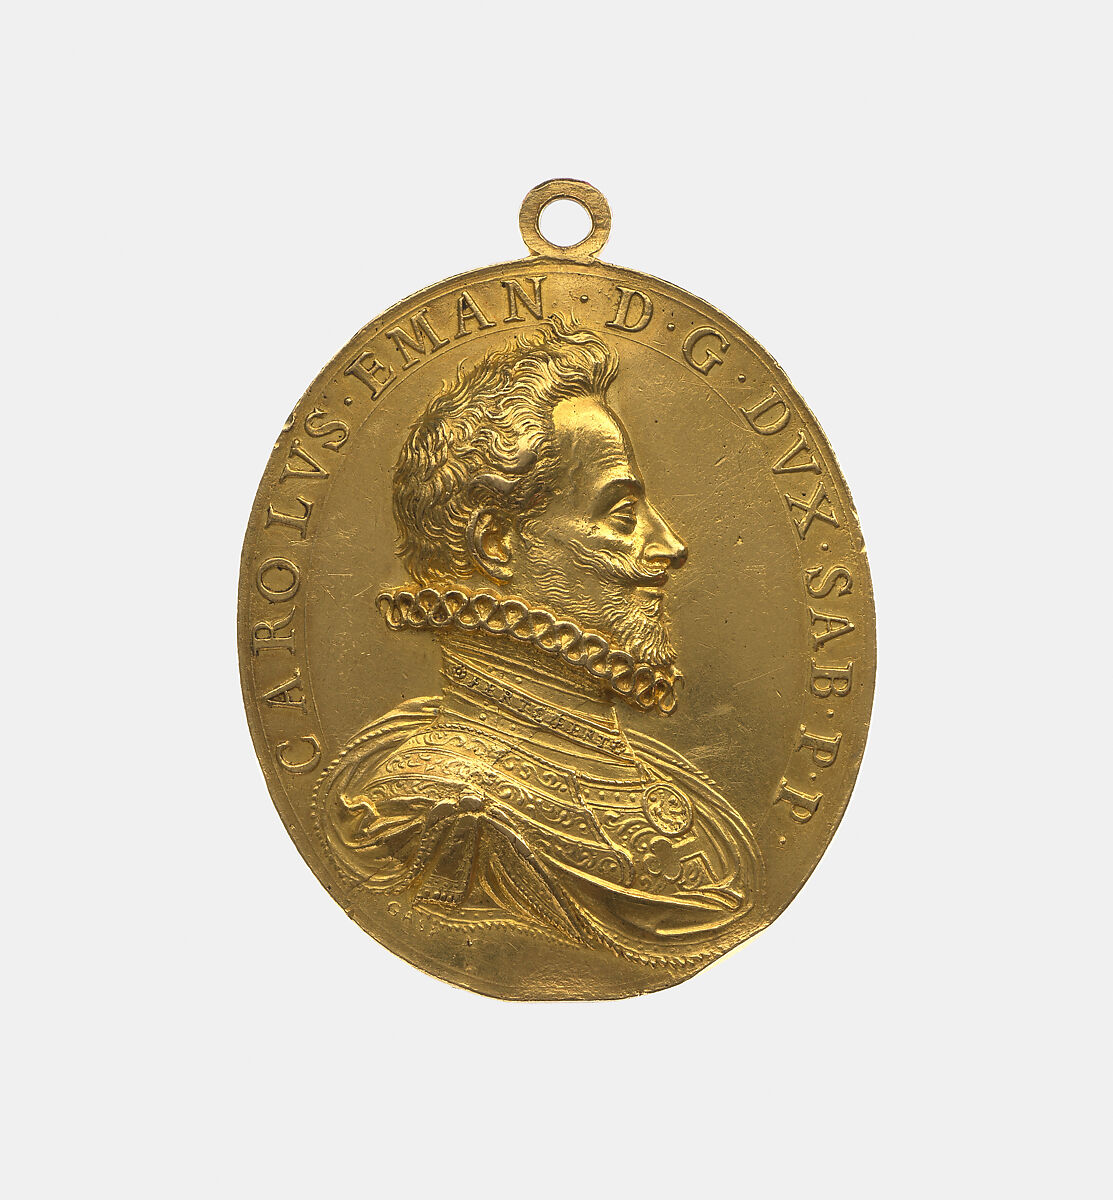 Charles Emanuel I 1562-1630, Duke of Savoy 1580-1630, Gasparo Mola (Italian, Coldre ca. 1580–1640 Rome), Gold, Italian, Florence 